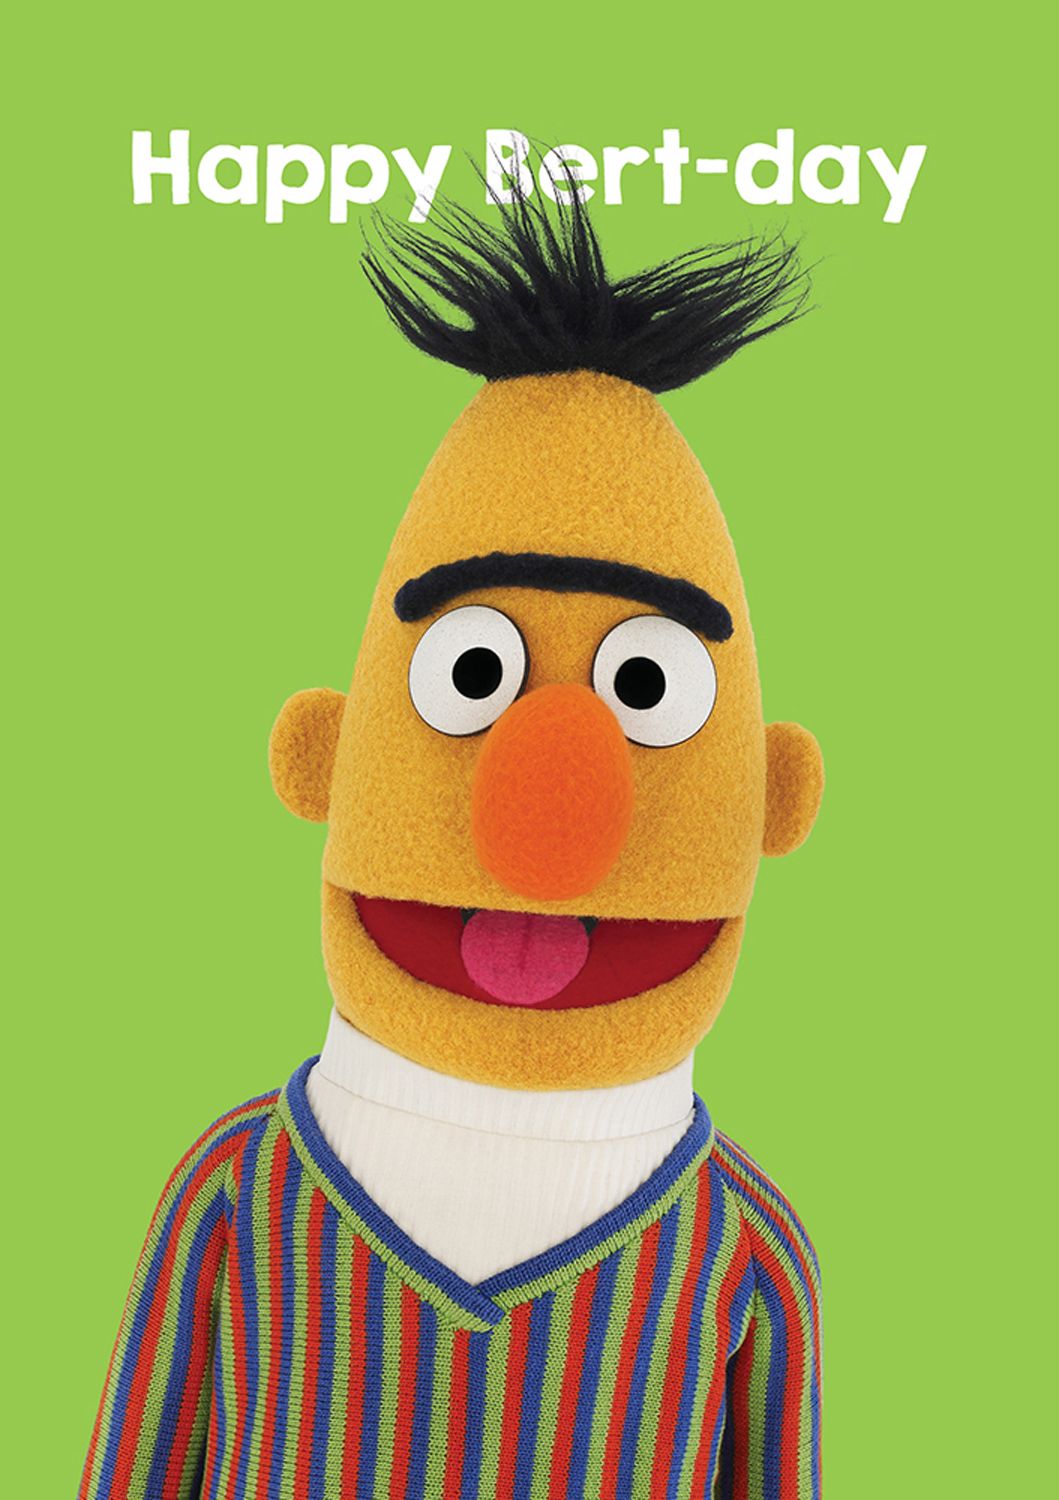 Sesame Street Happy 'Bert Day' Greetings Card.